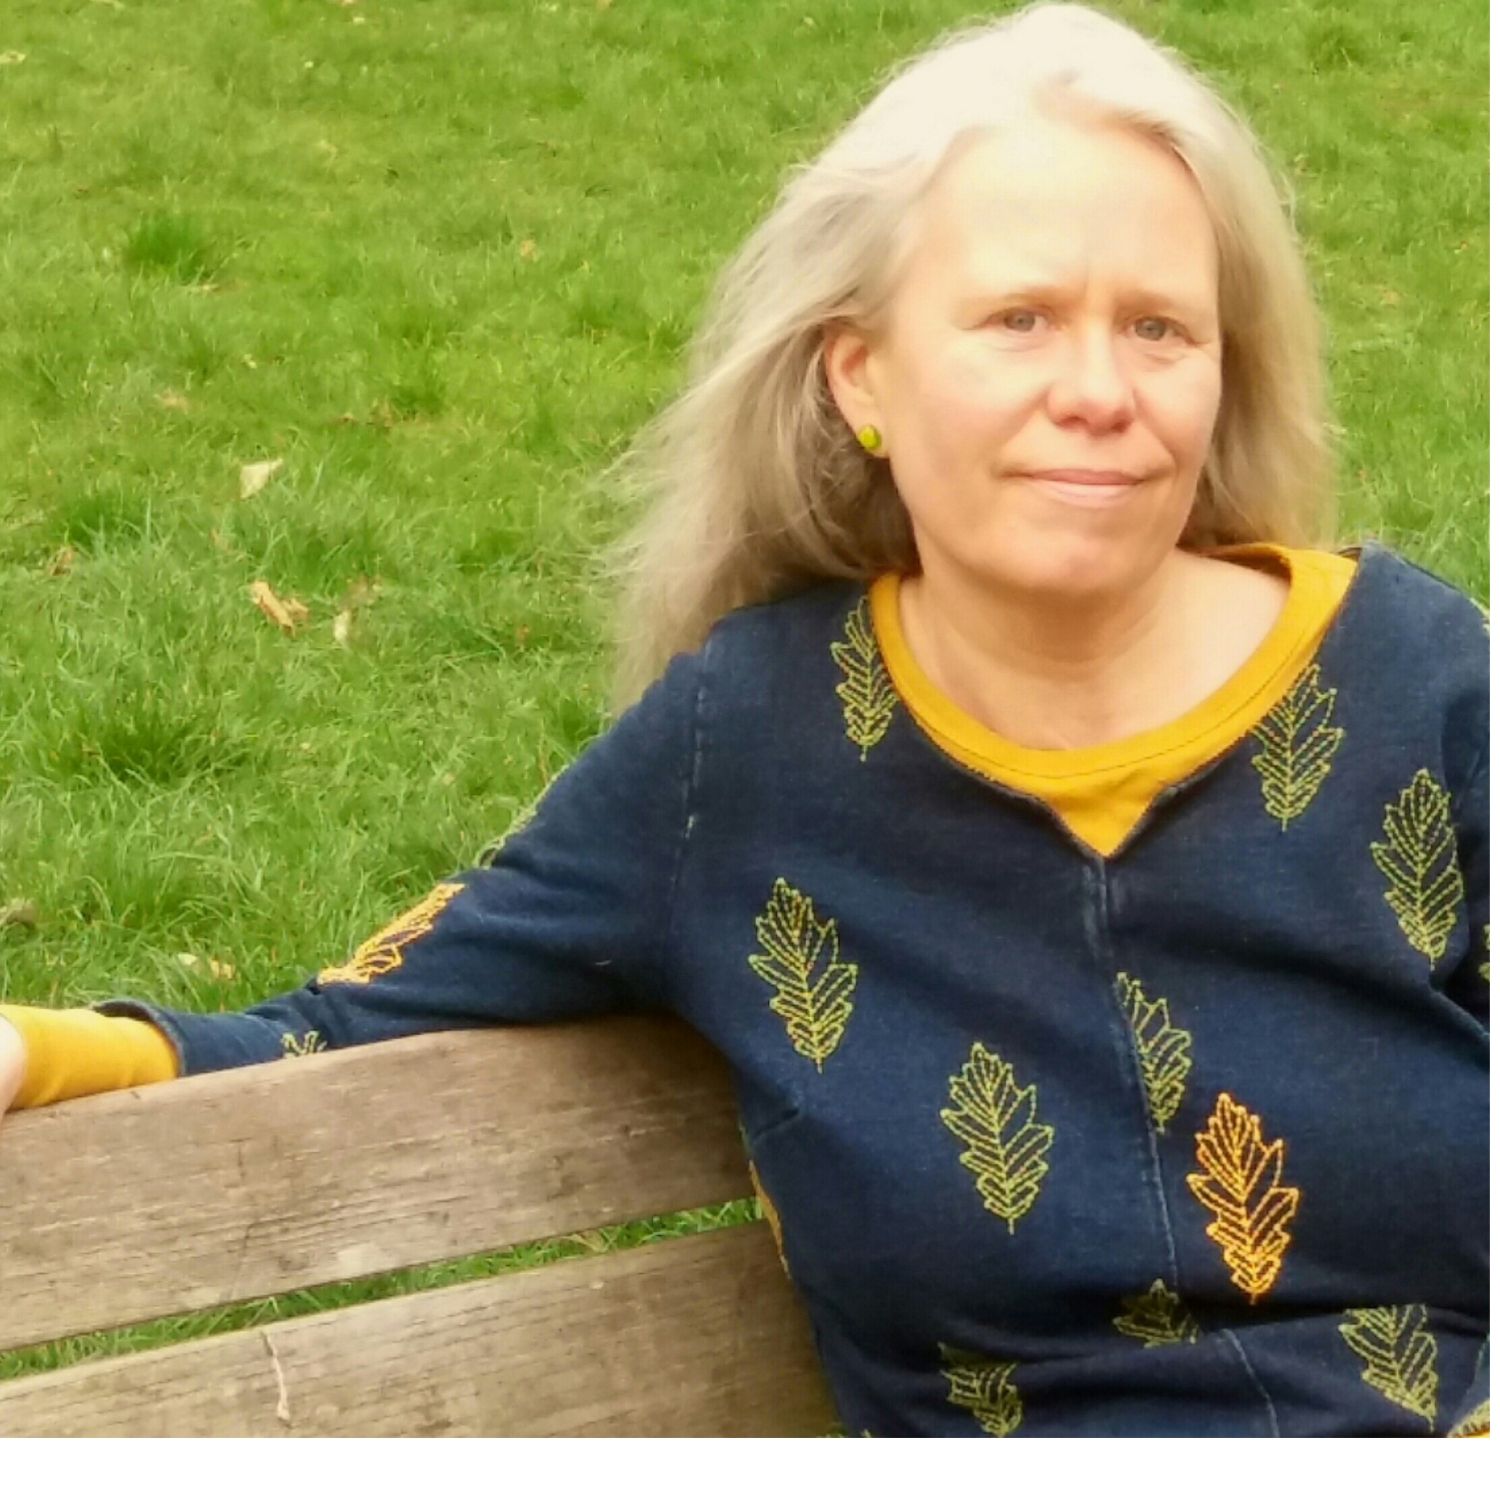 Karin Sieger: Psychotherapist, Writer, Podcaster (c) KarinSieger.com